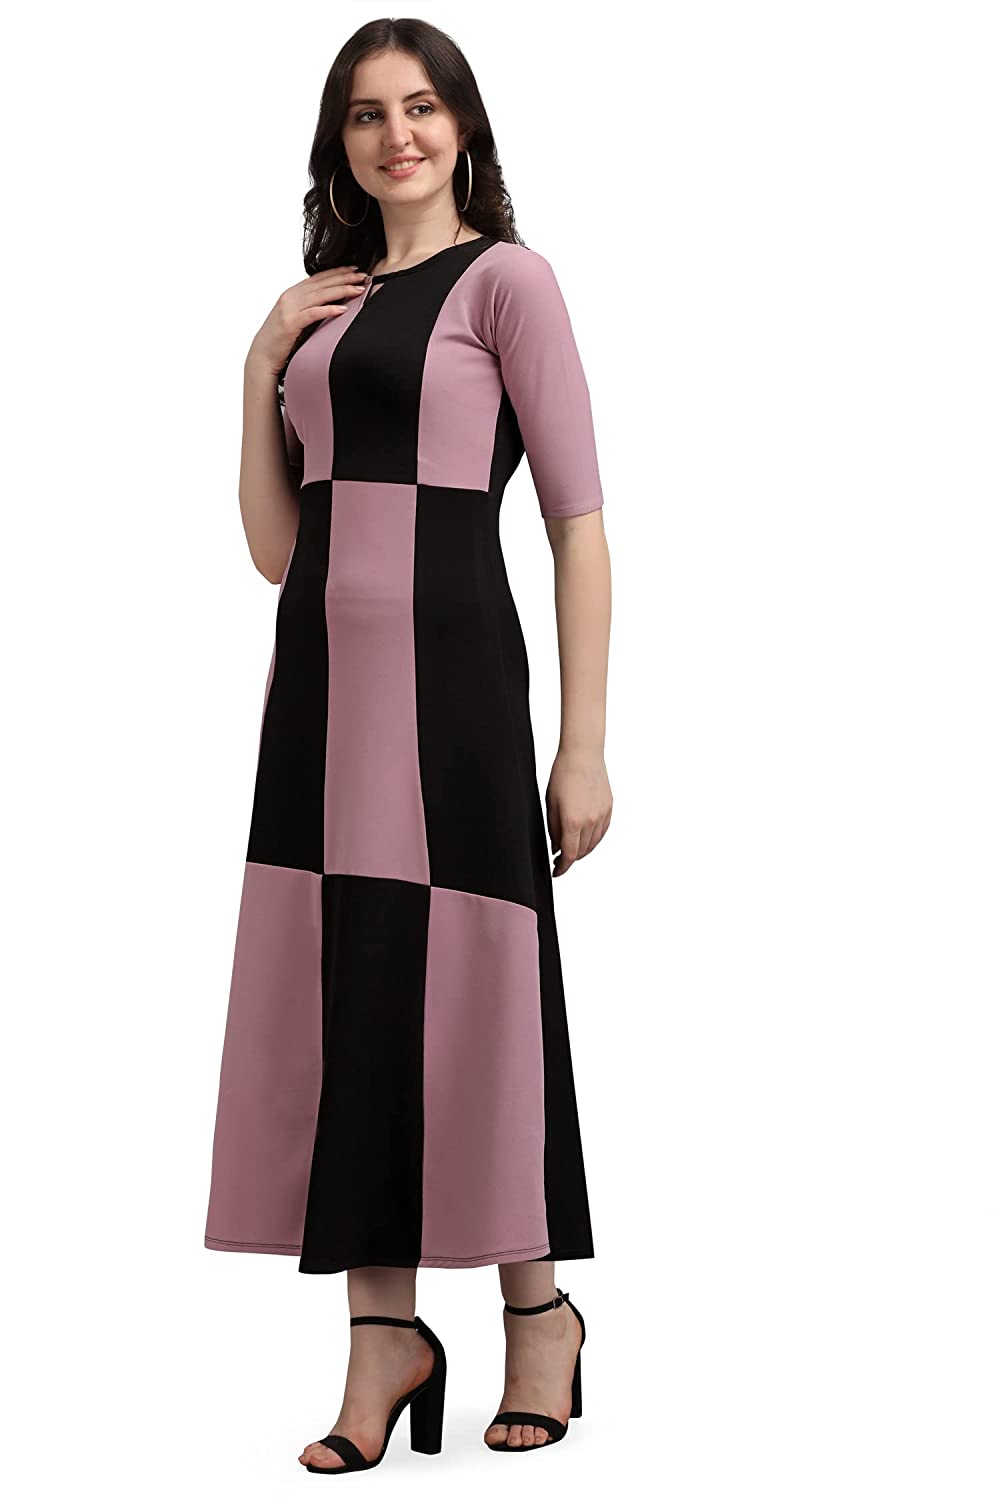 PURVAJA Women's Maxi Dress -  Dresses in Sri Lanka from Arcade Online Shopping - Just Rs. 4699!